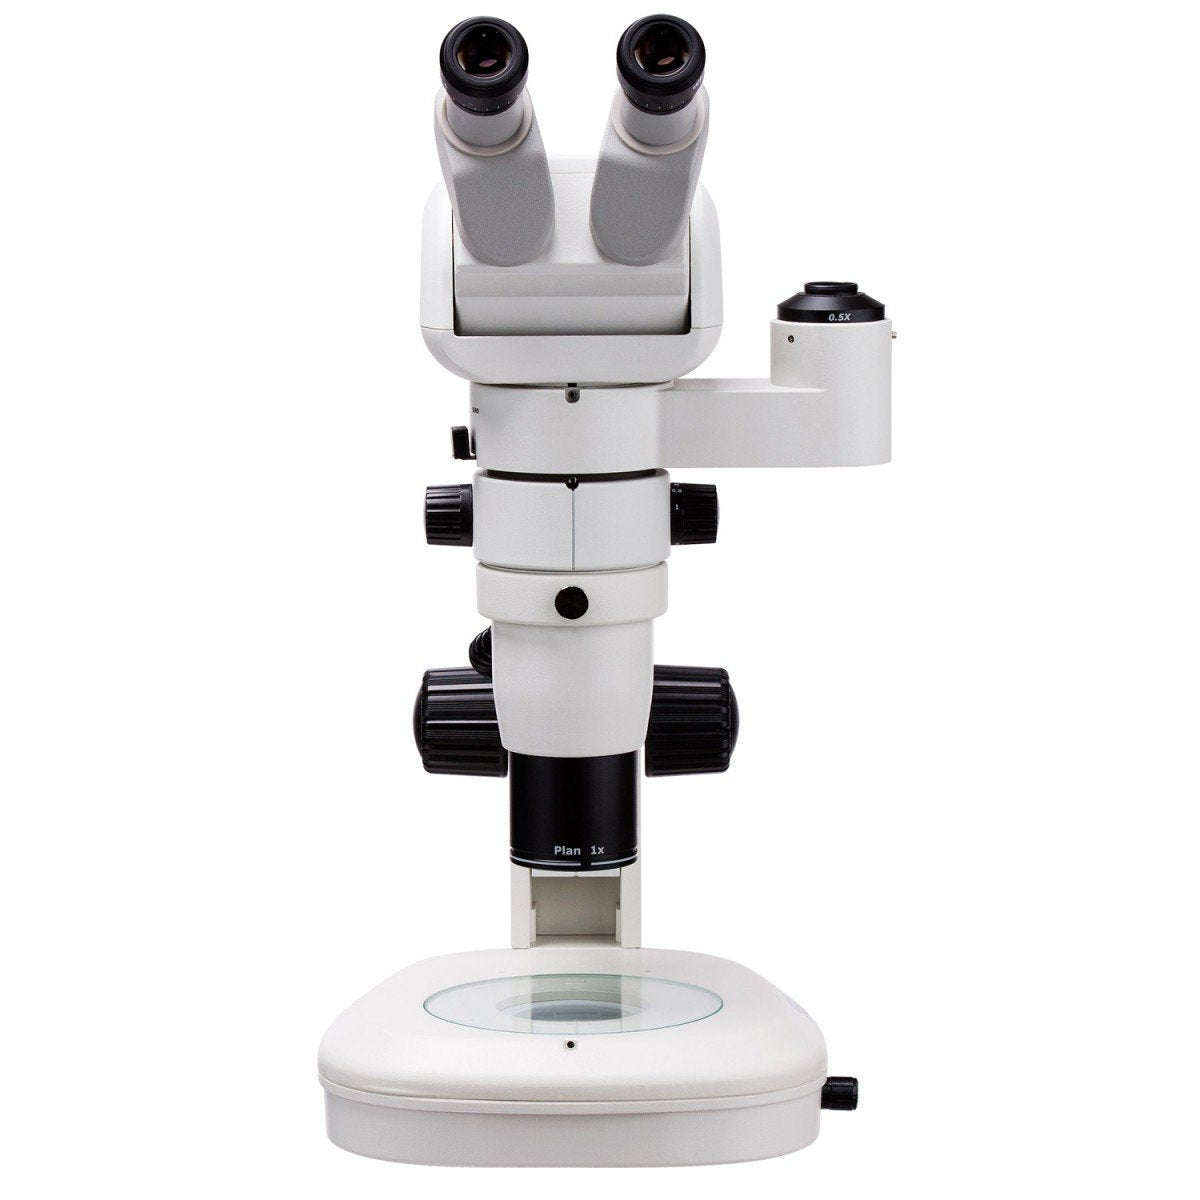 AmScope 8X-80X CMO Trinocular Zoom Stereo Microscope with Adjustable Head + 16MP USB3.0 Camera